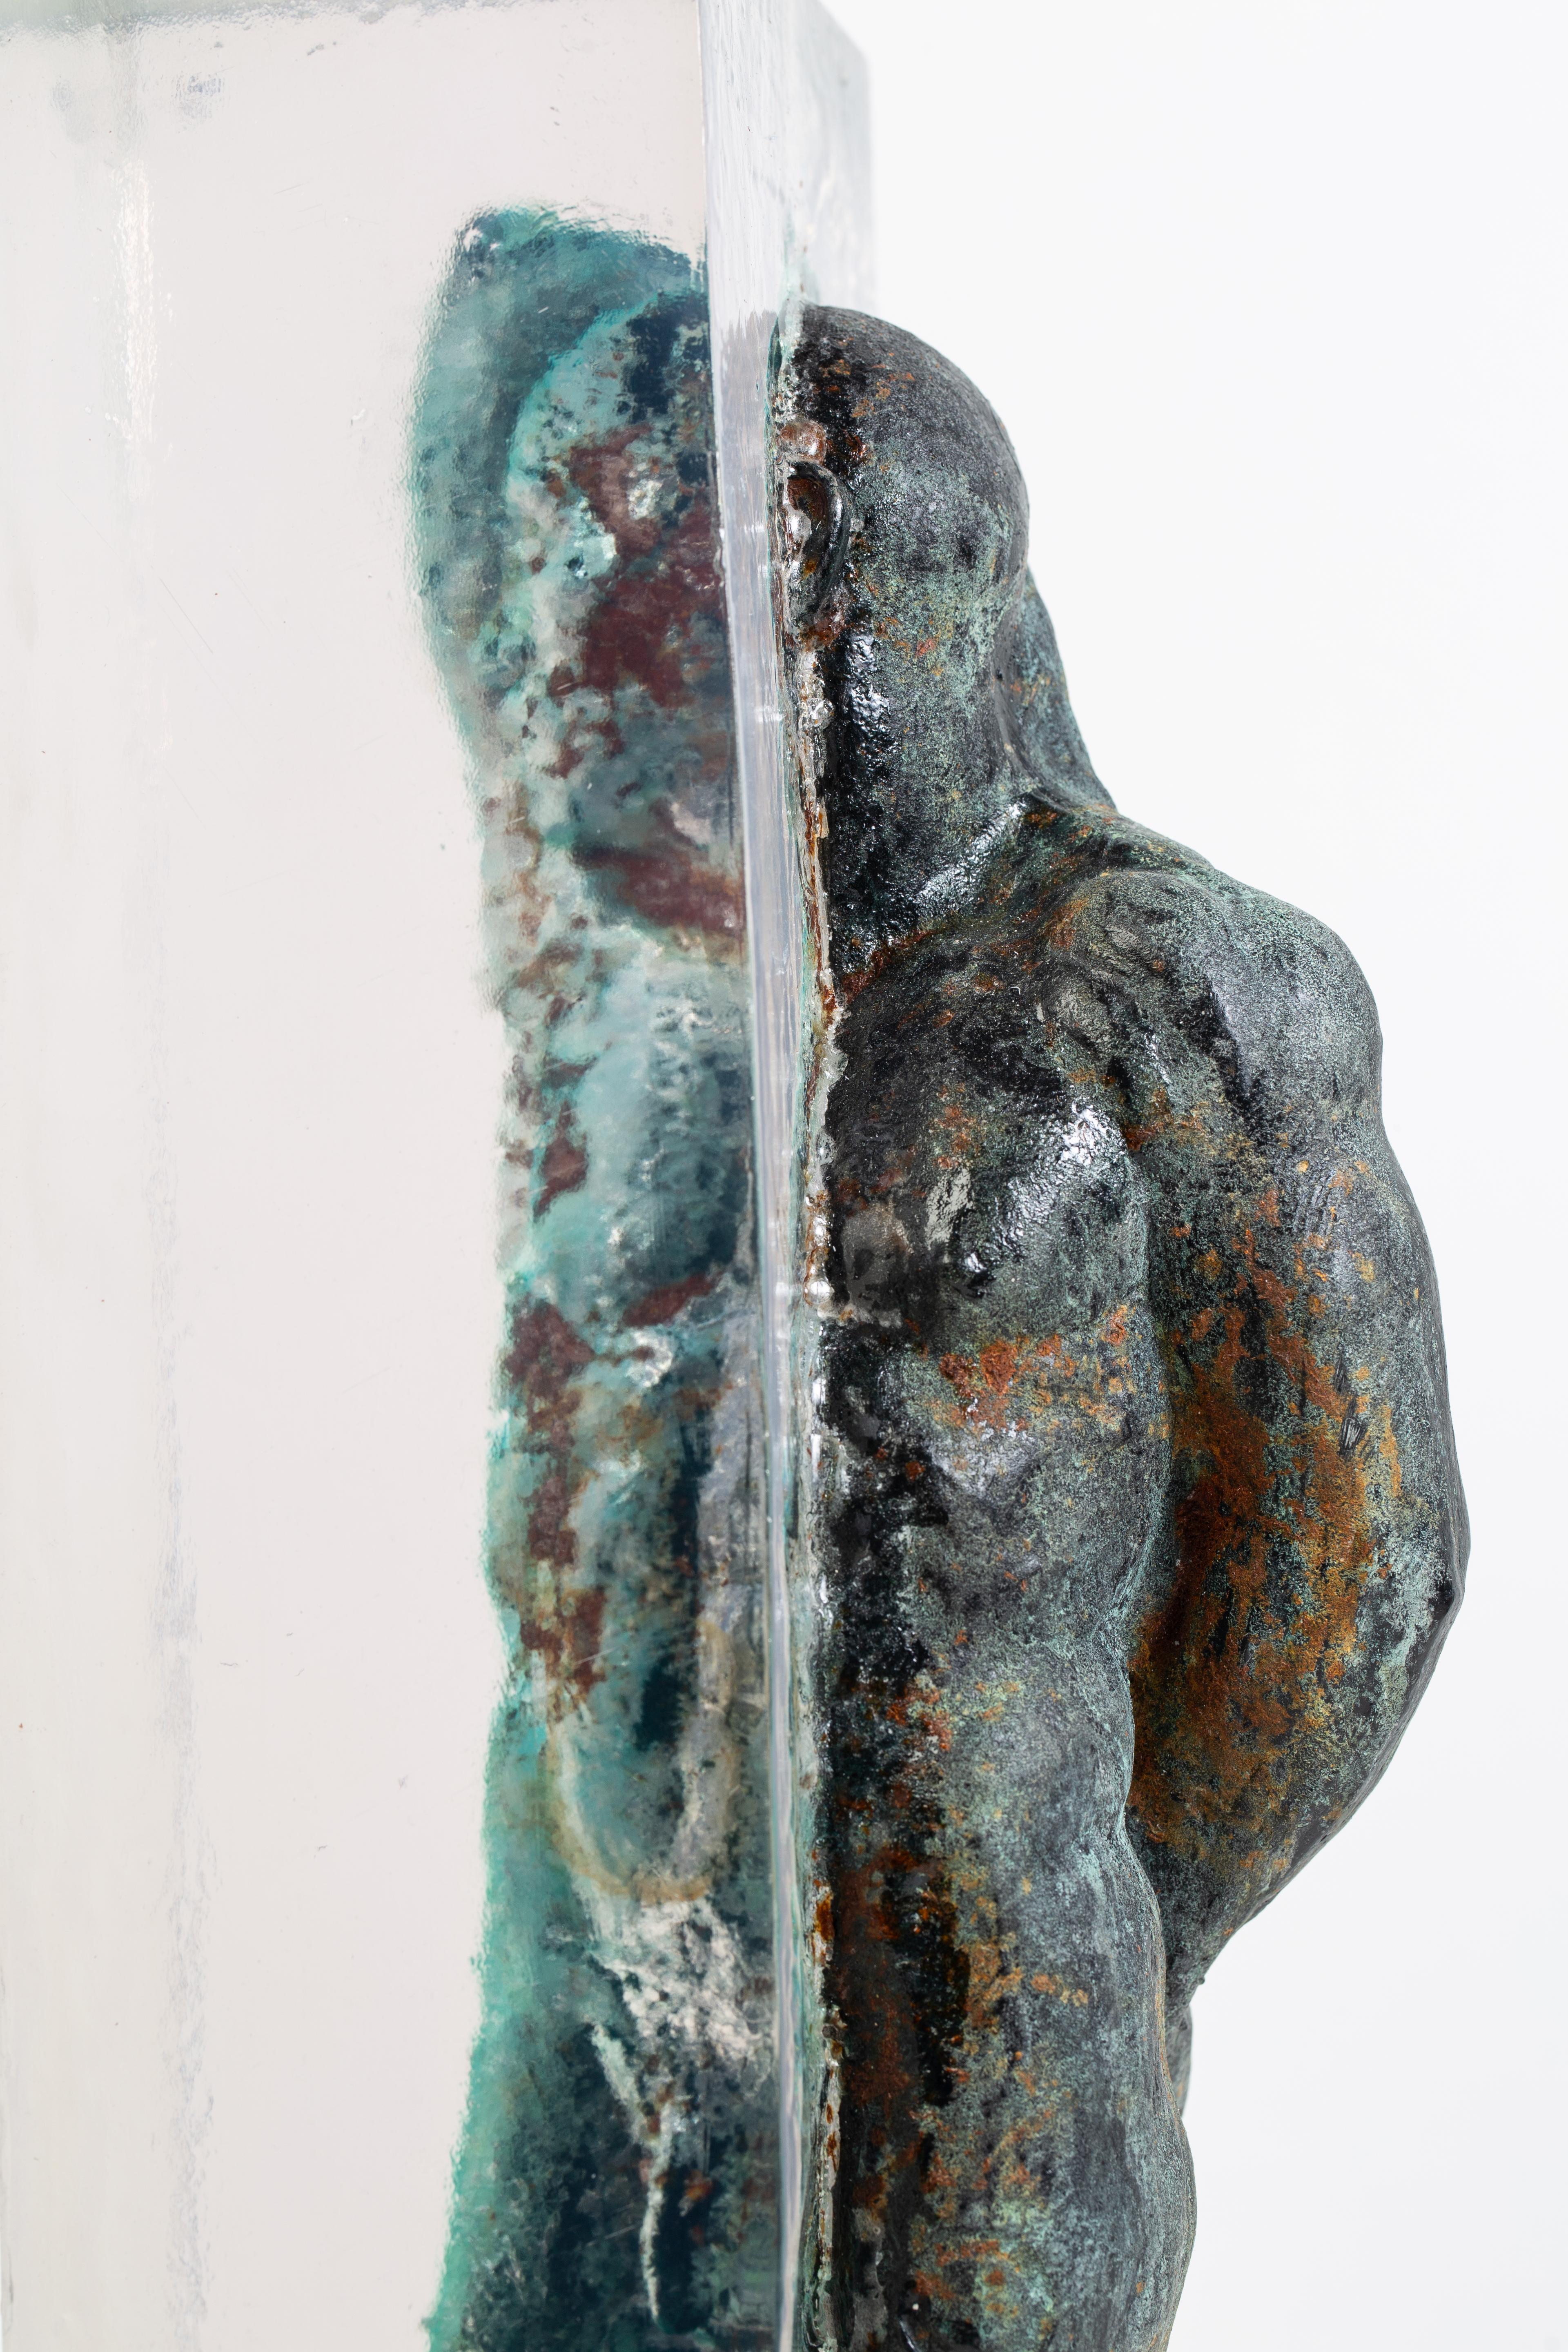 Embedded Slave - After Michelangelo, Sculpture Half Embedded in Clear Resin 3